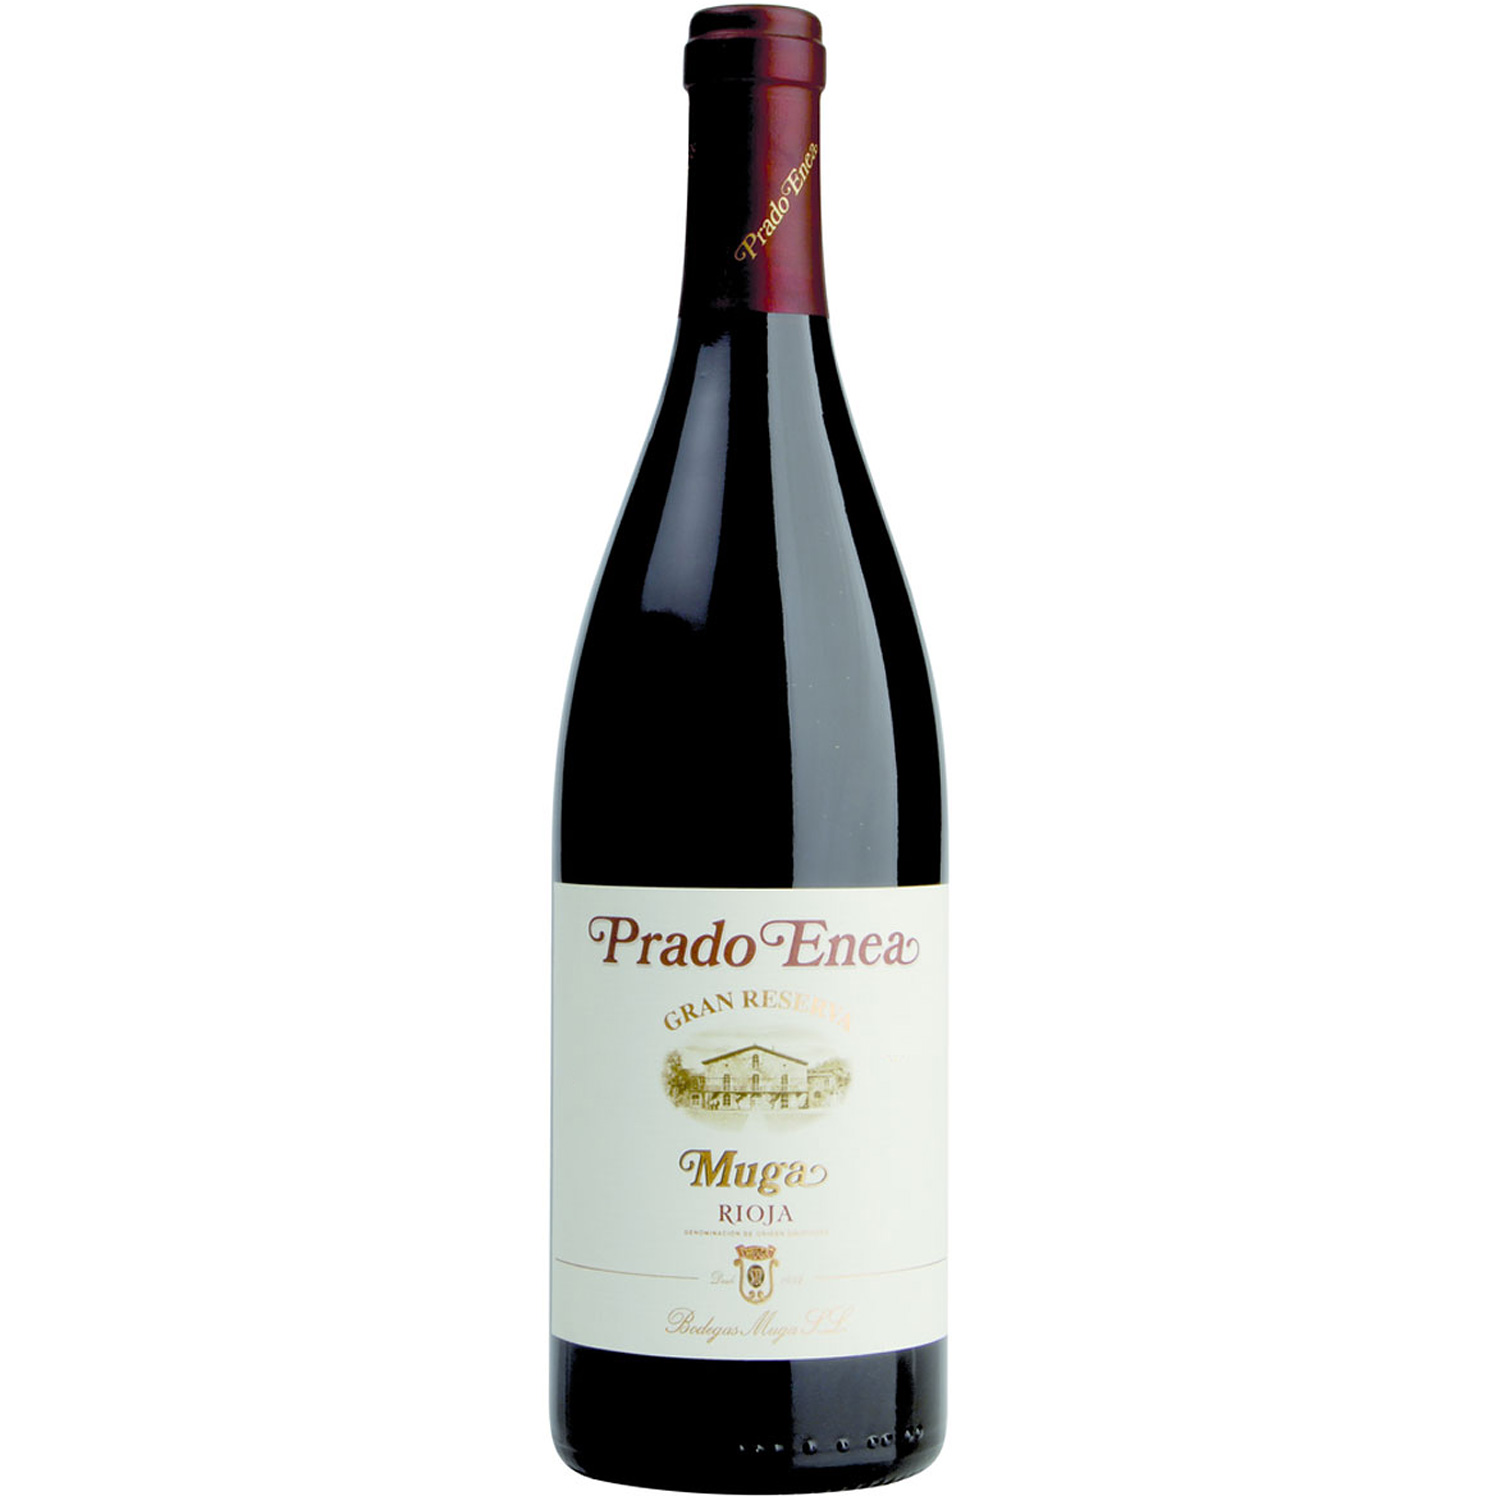 Spanischer Rotwein Prado Enea Gran Reserva Muga Rioja 2014